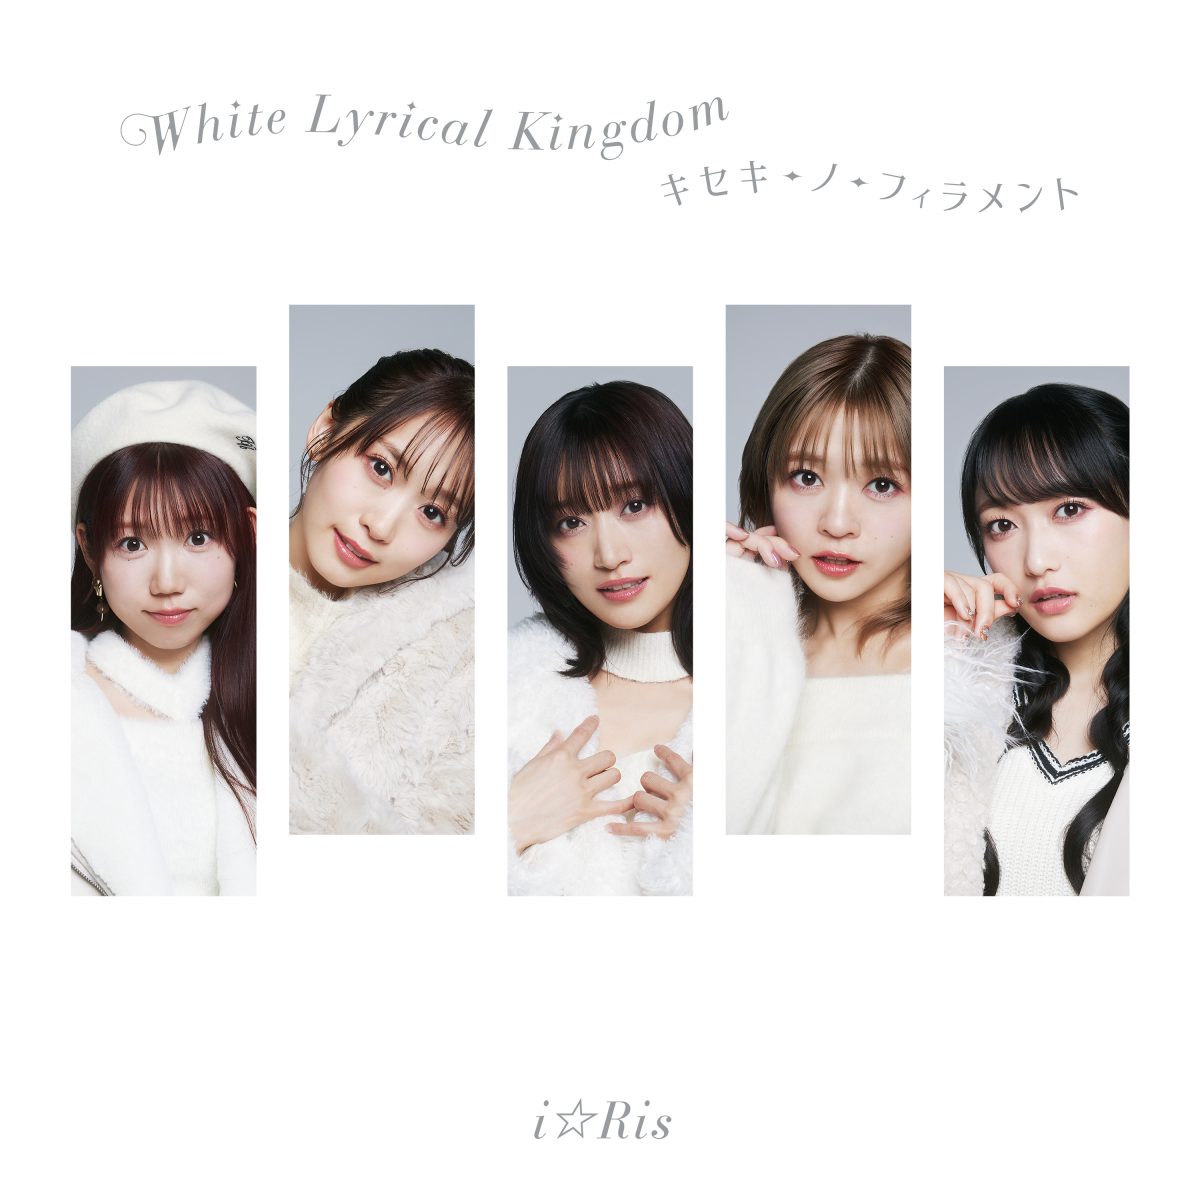 「White Lyrical Kingdom/キセキ-ノ-フィラメント」CD盤ジャケット